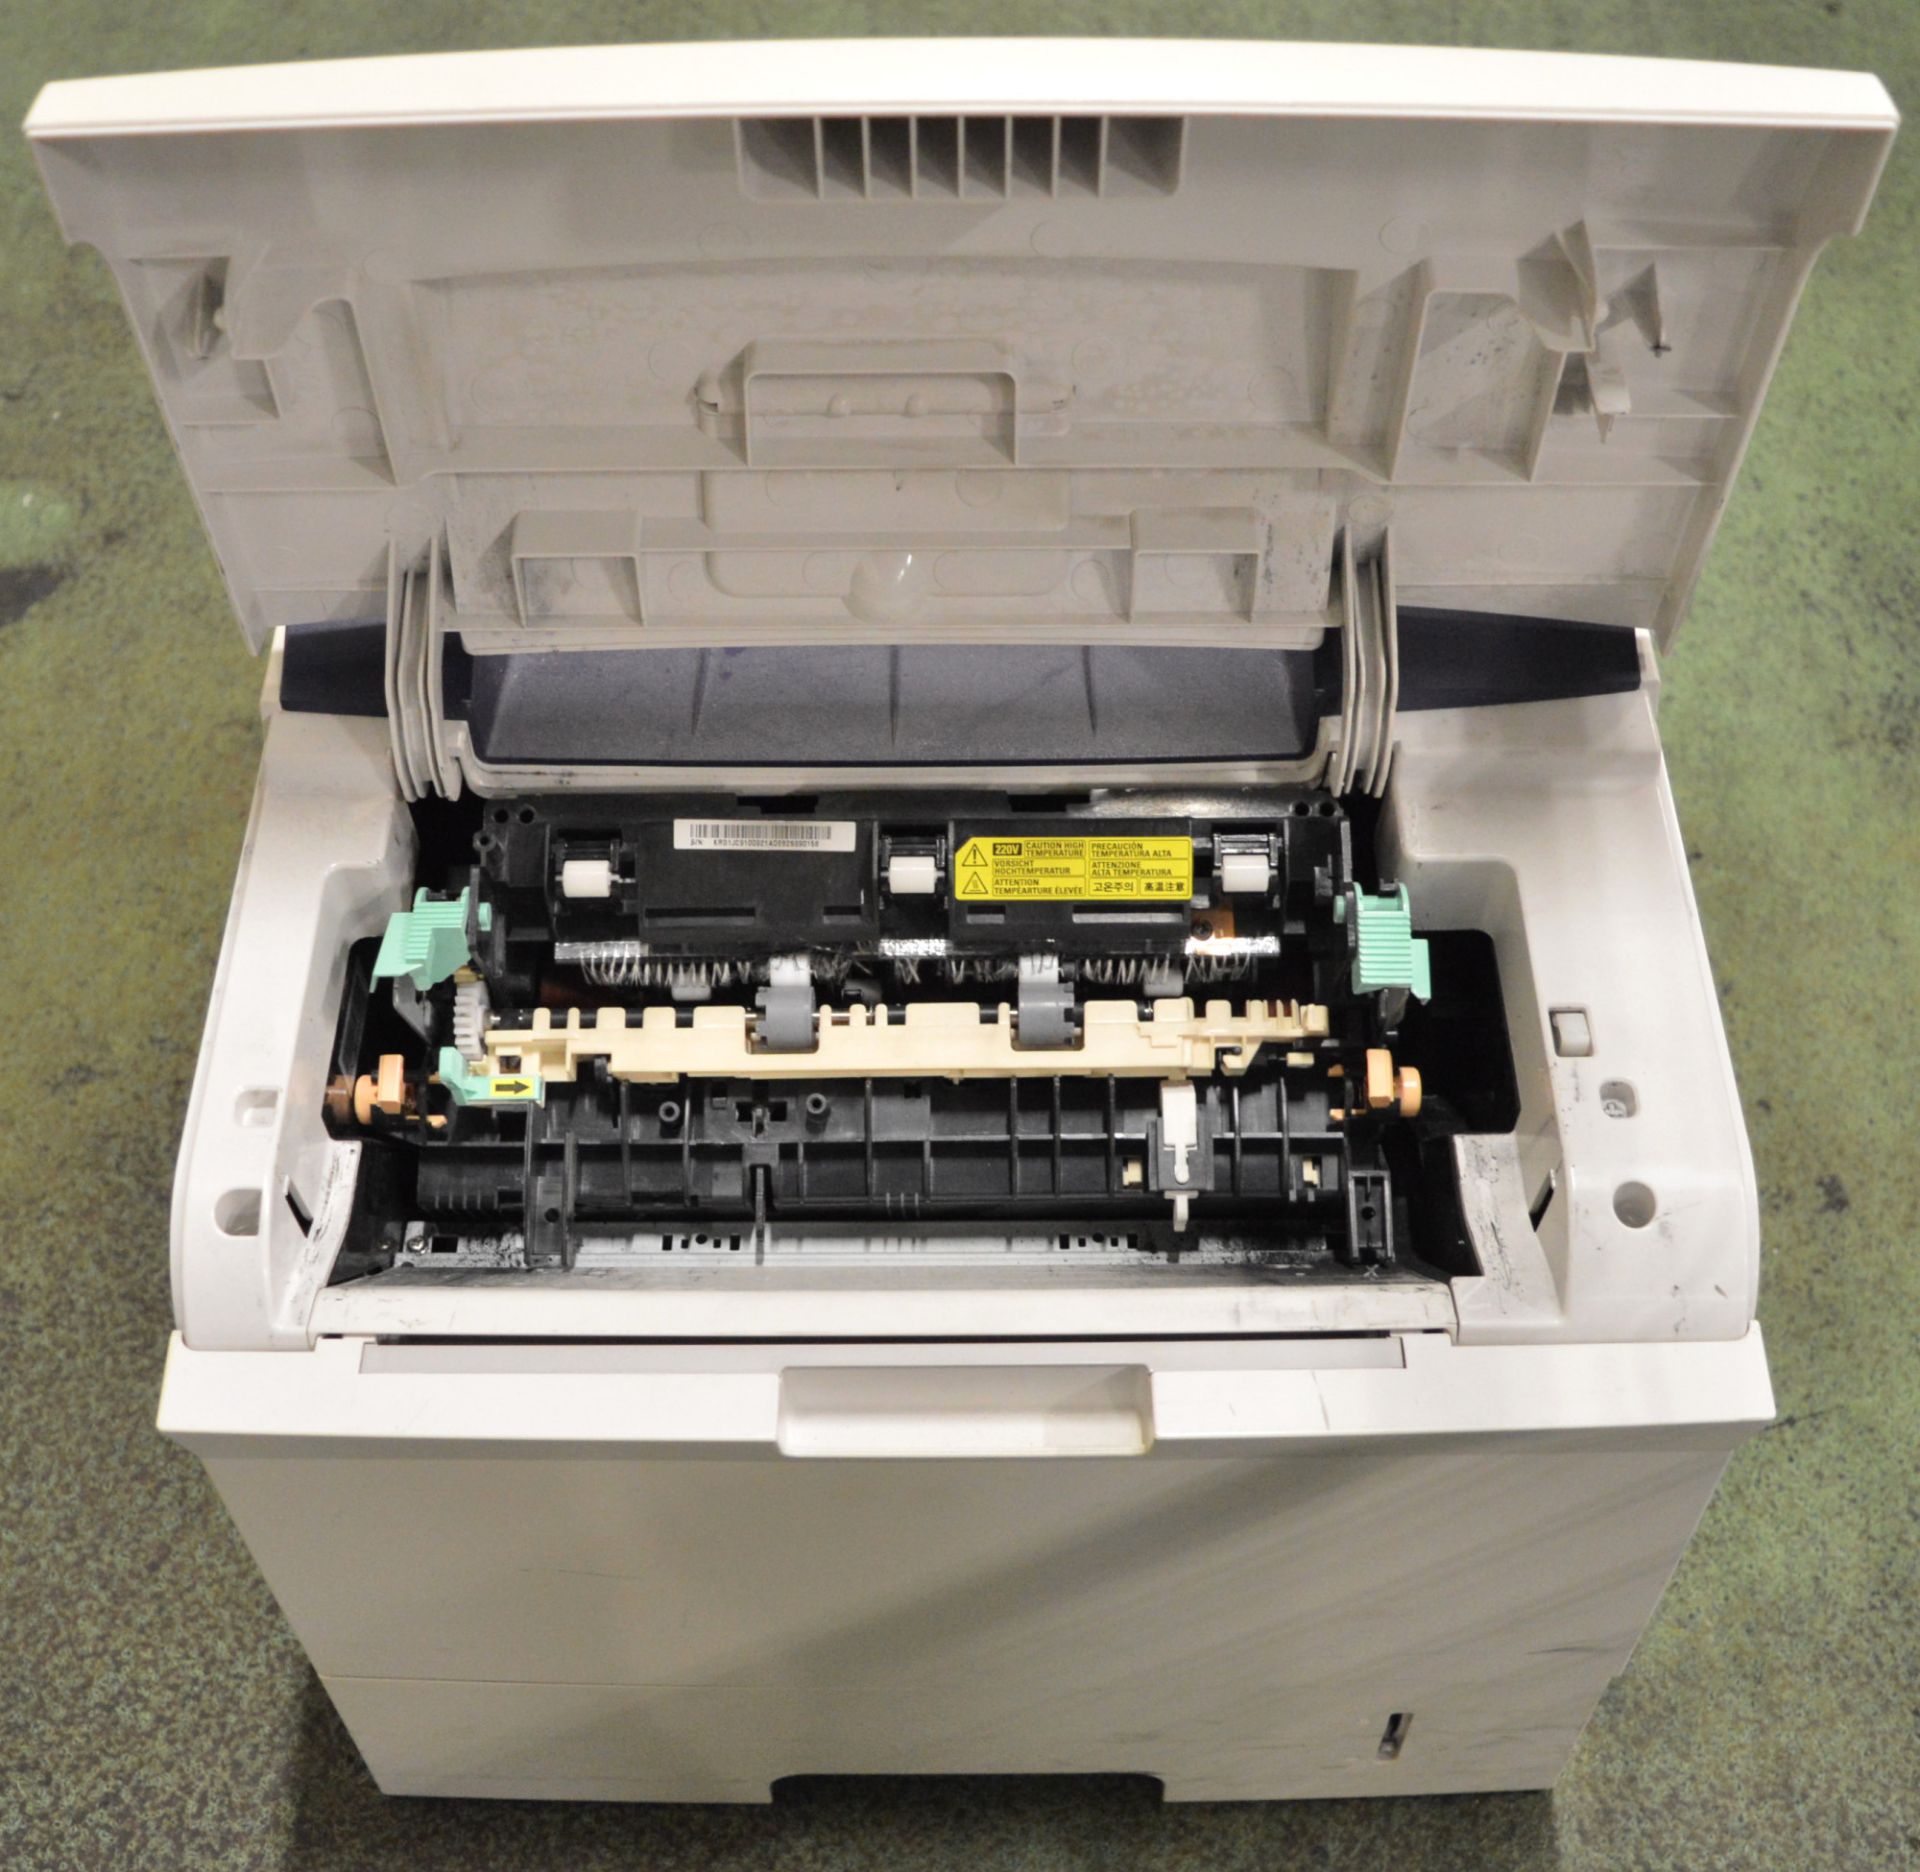 4x Xerox Phaser 3600 Printers. - Image 3 of 5